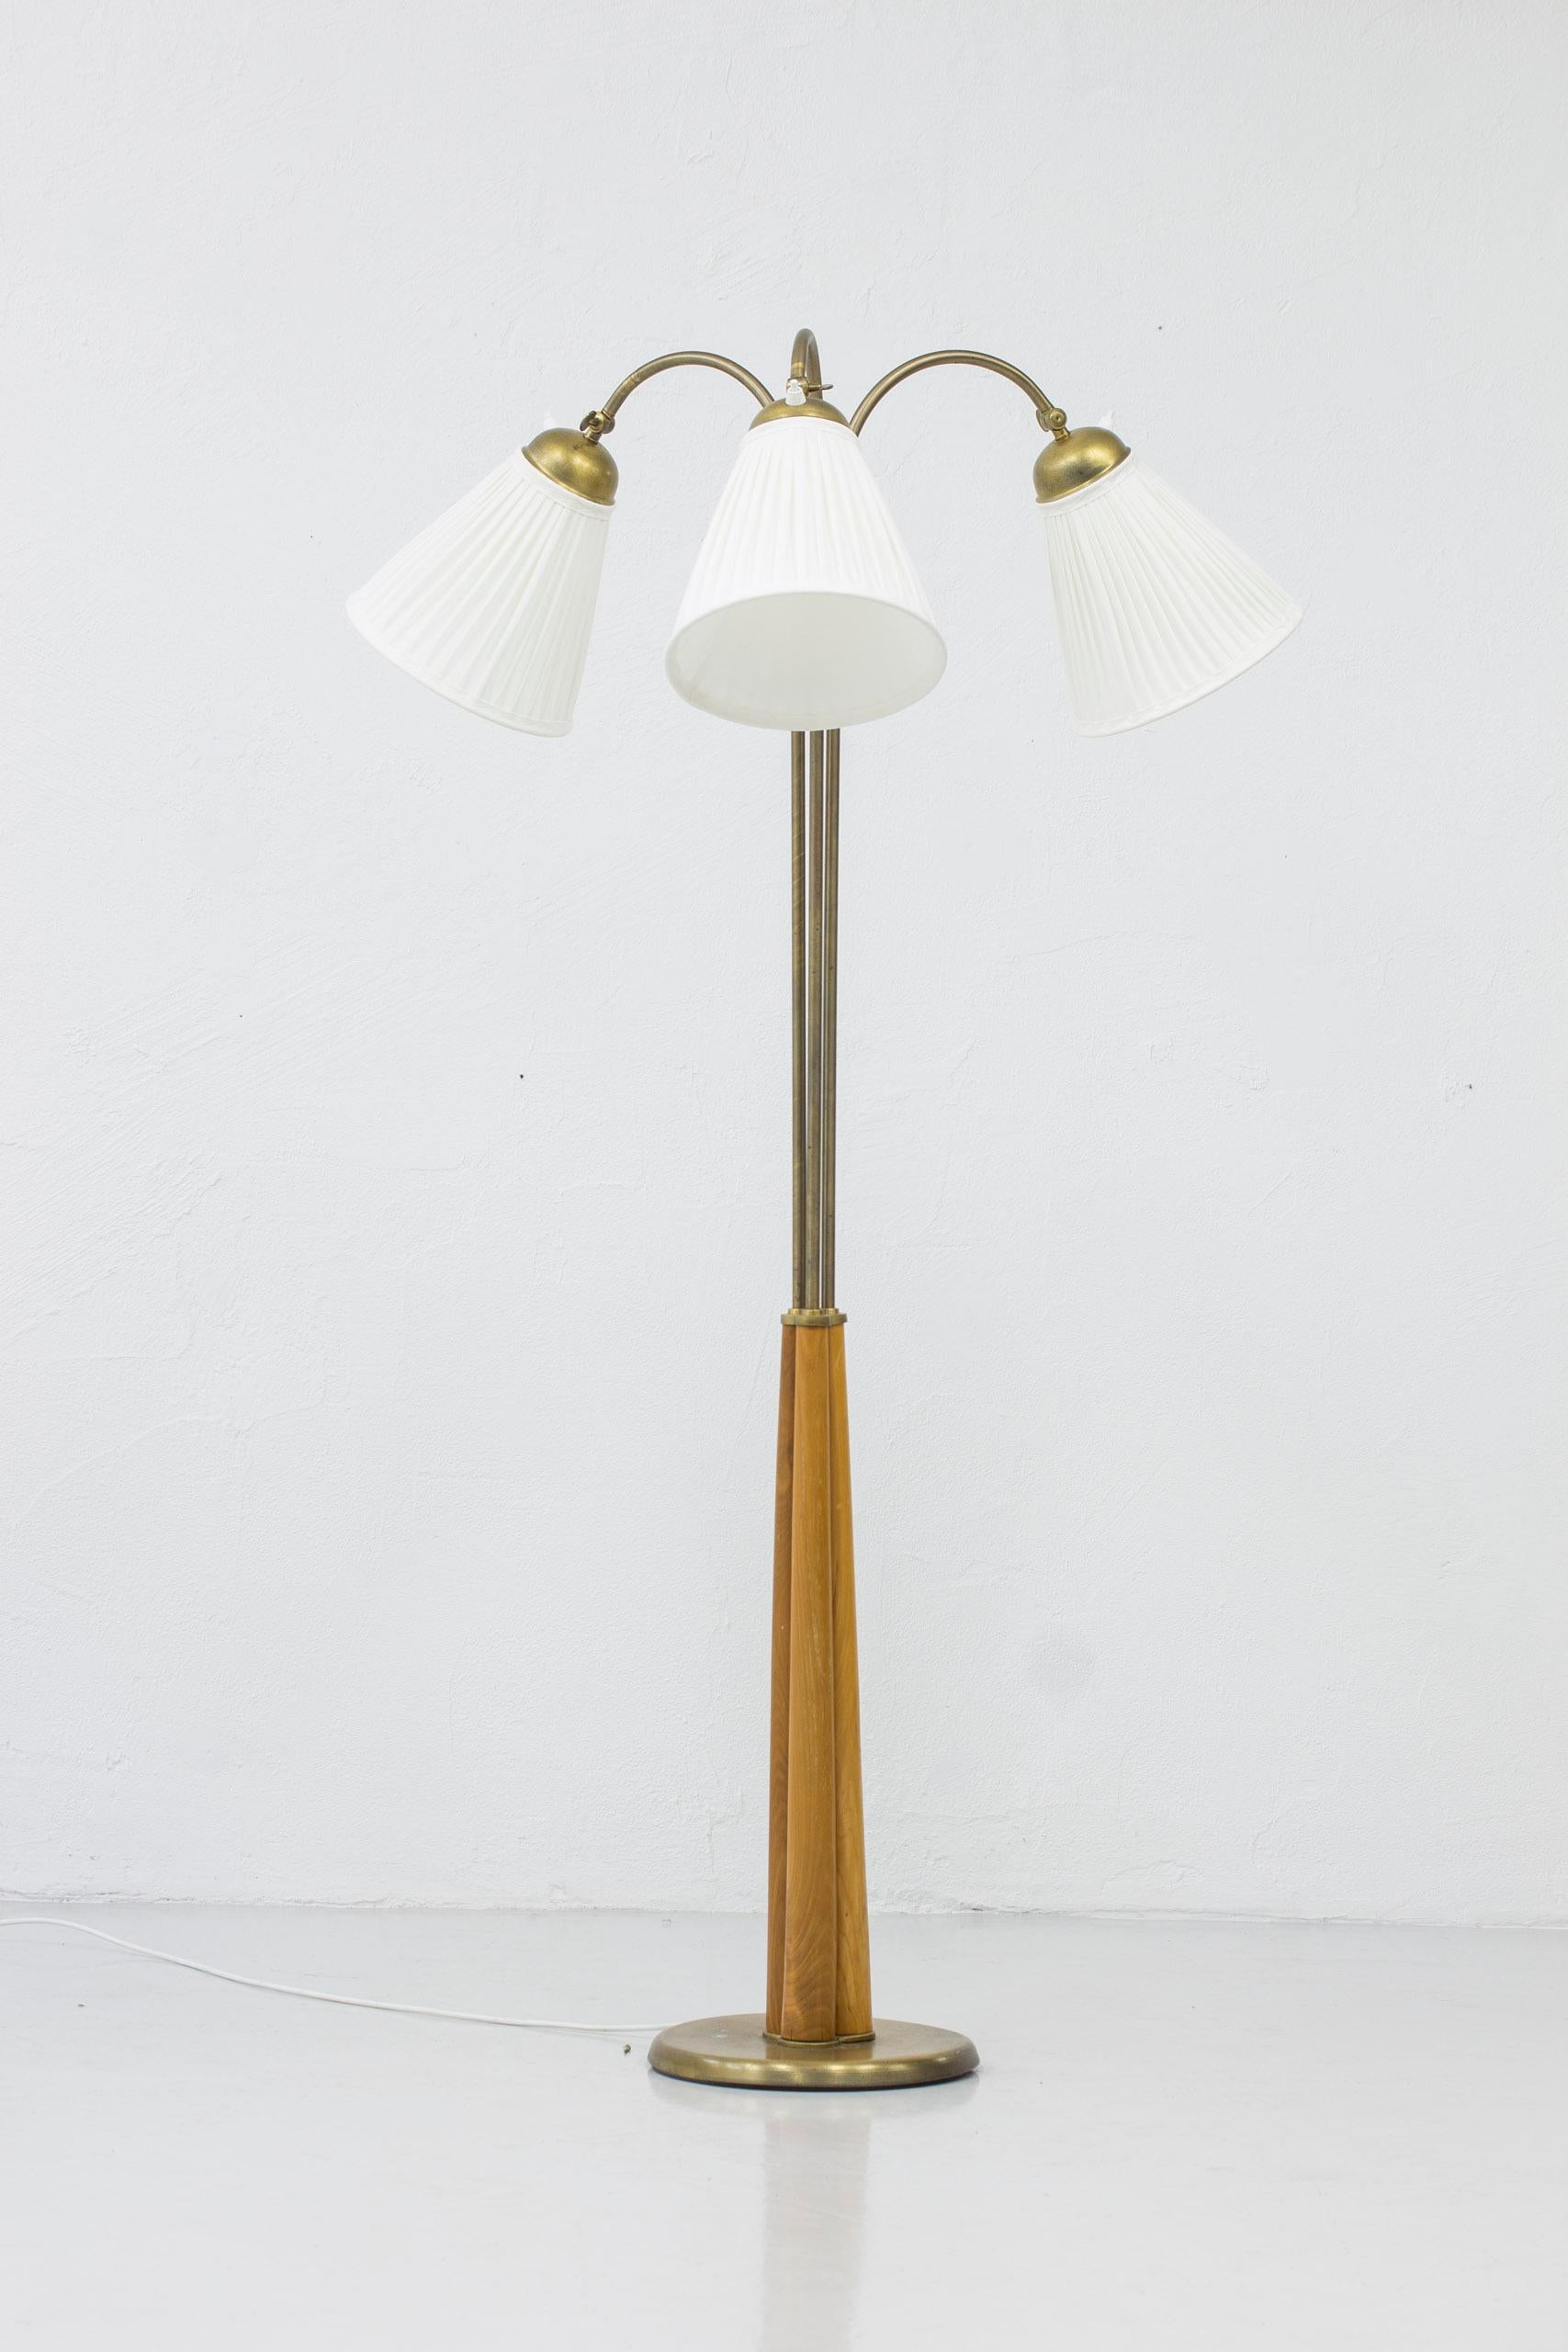 Scandinavian Modern Swedish modern floor lamp elm and brass with three arms, Sweden, 1940s